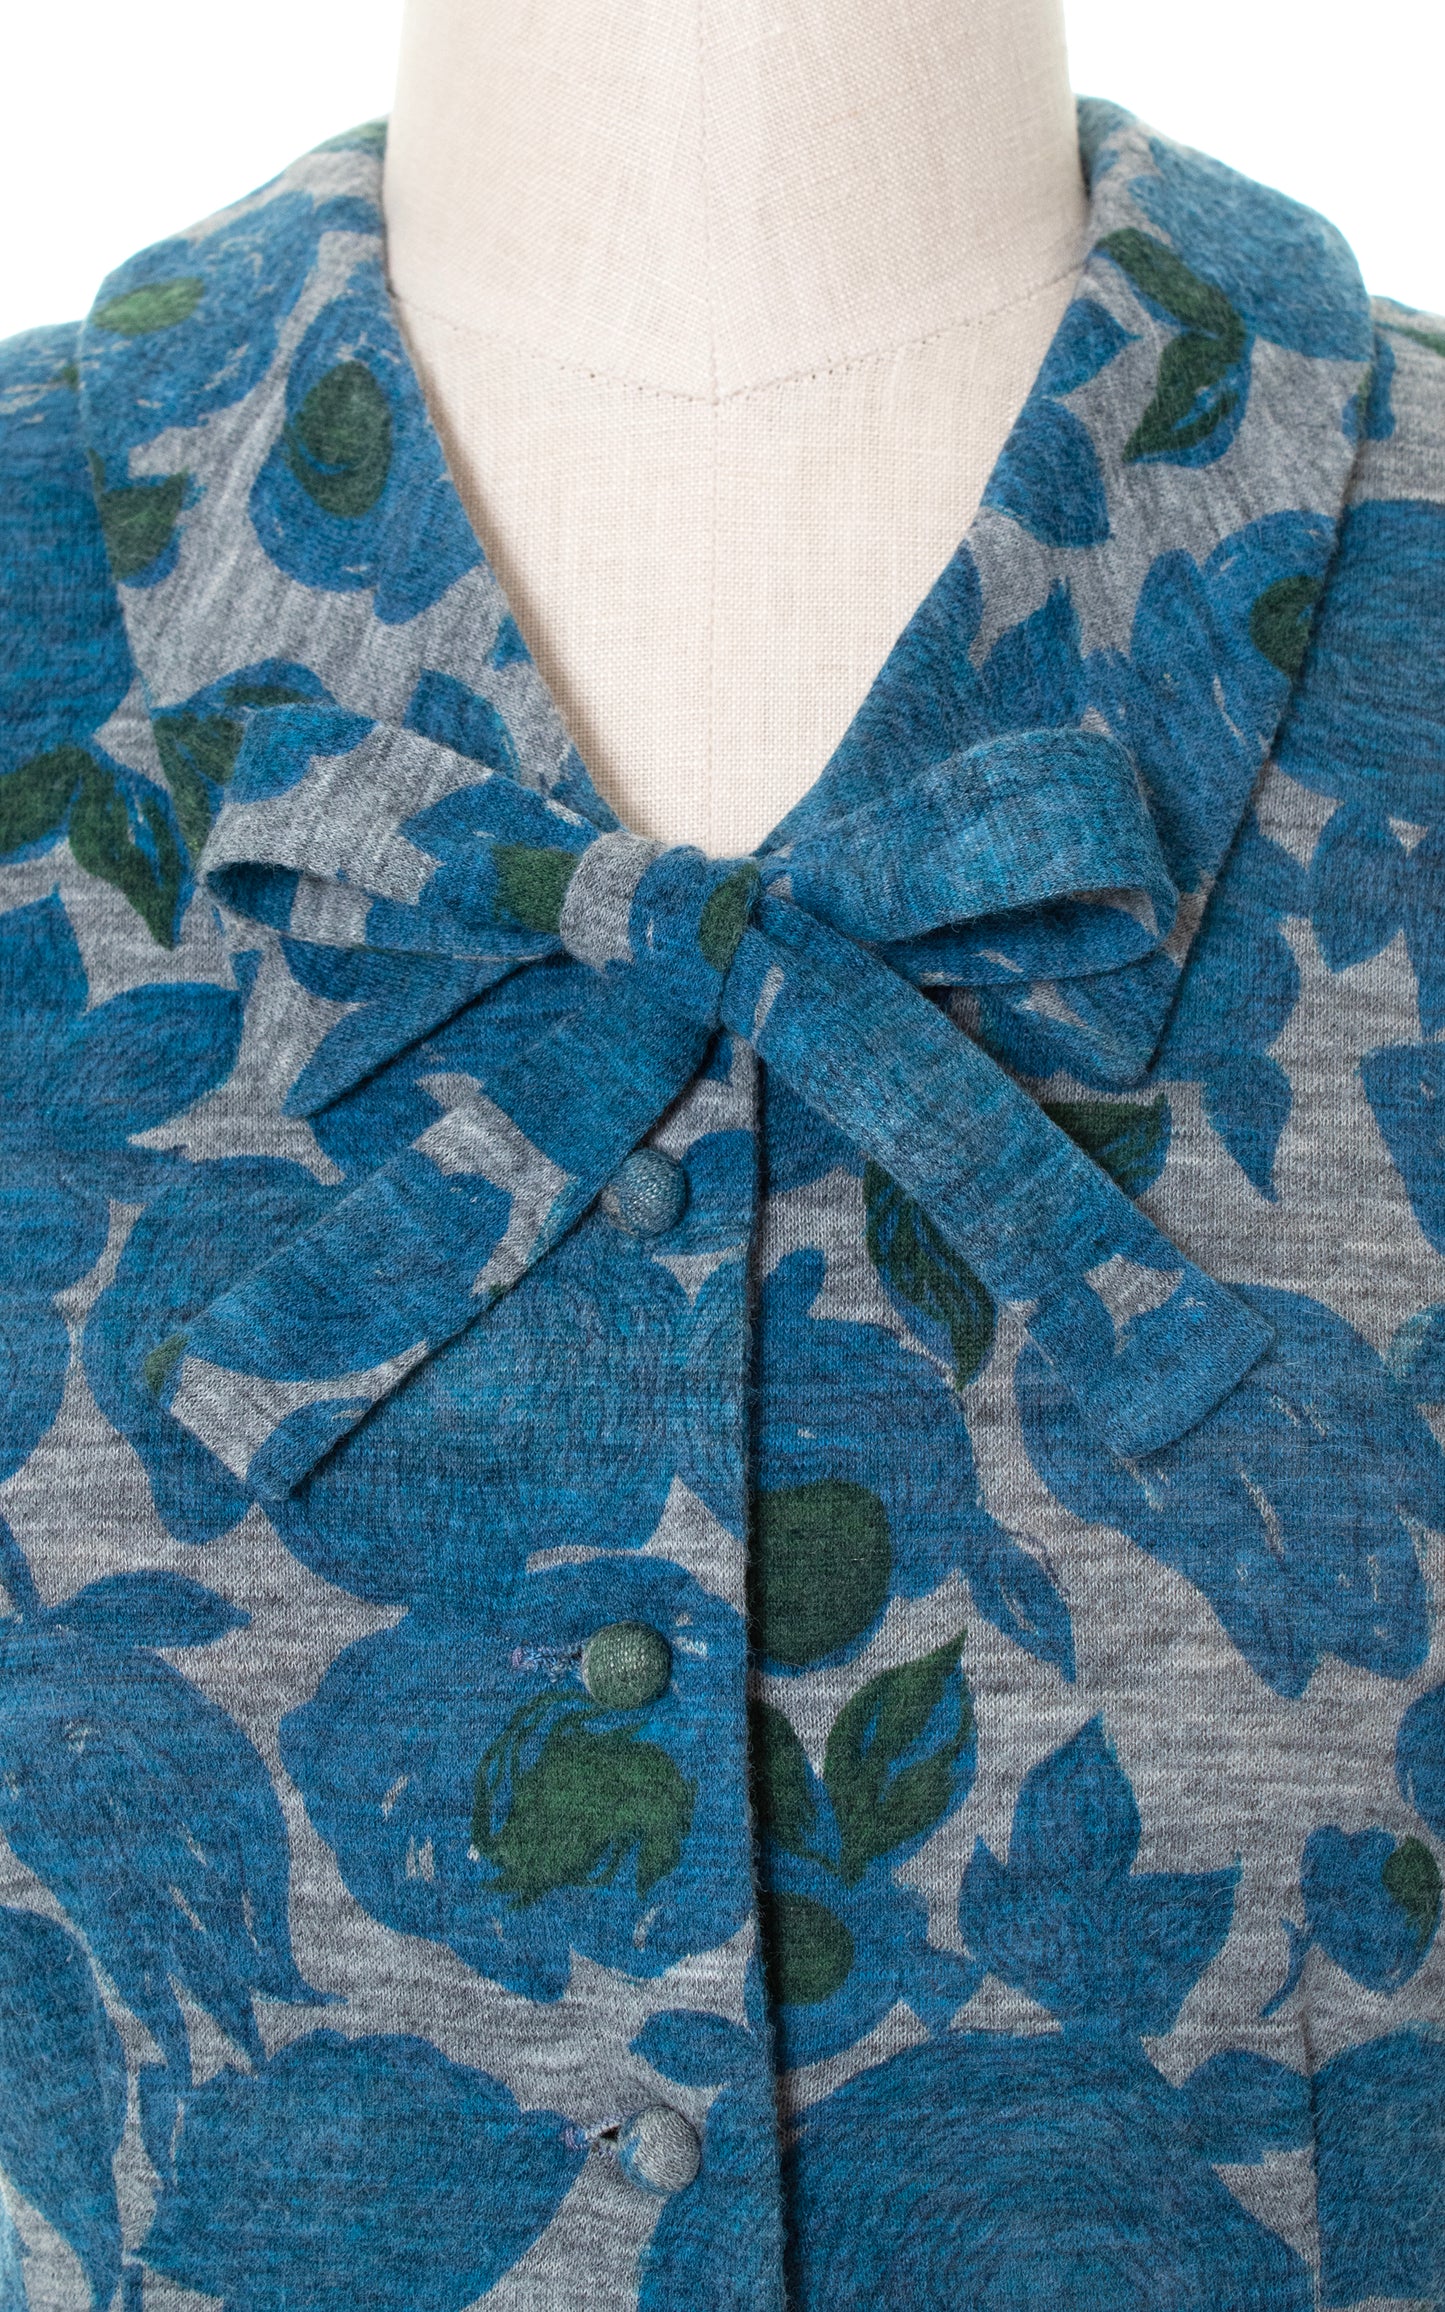 Vintage 60s 1960s Blue Floral Cotton Jersey Sheath Shirtwaist Shirt Dress Large Volup Plus Size BirthdayLifeVintage